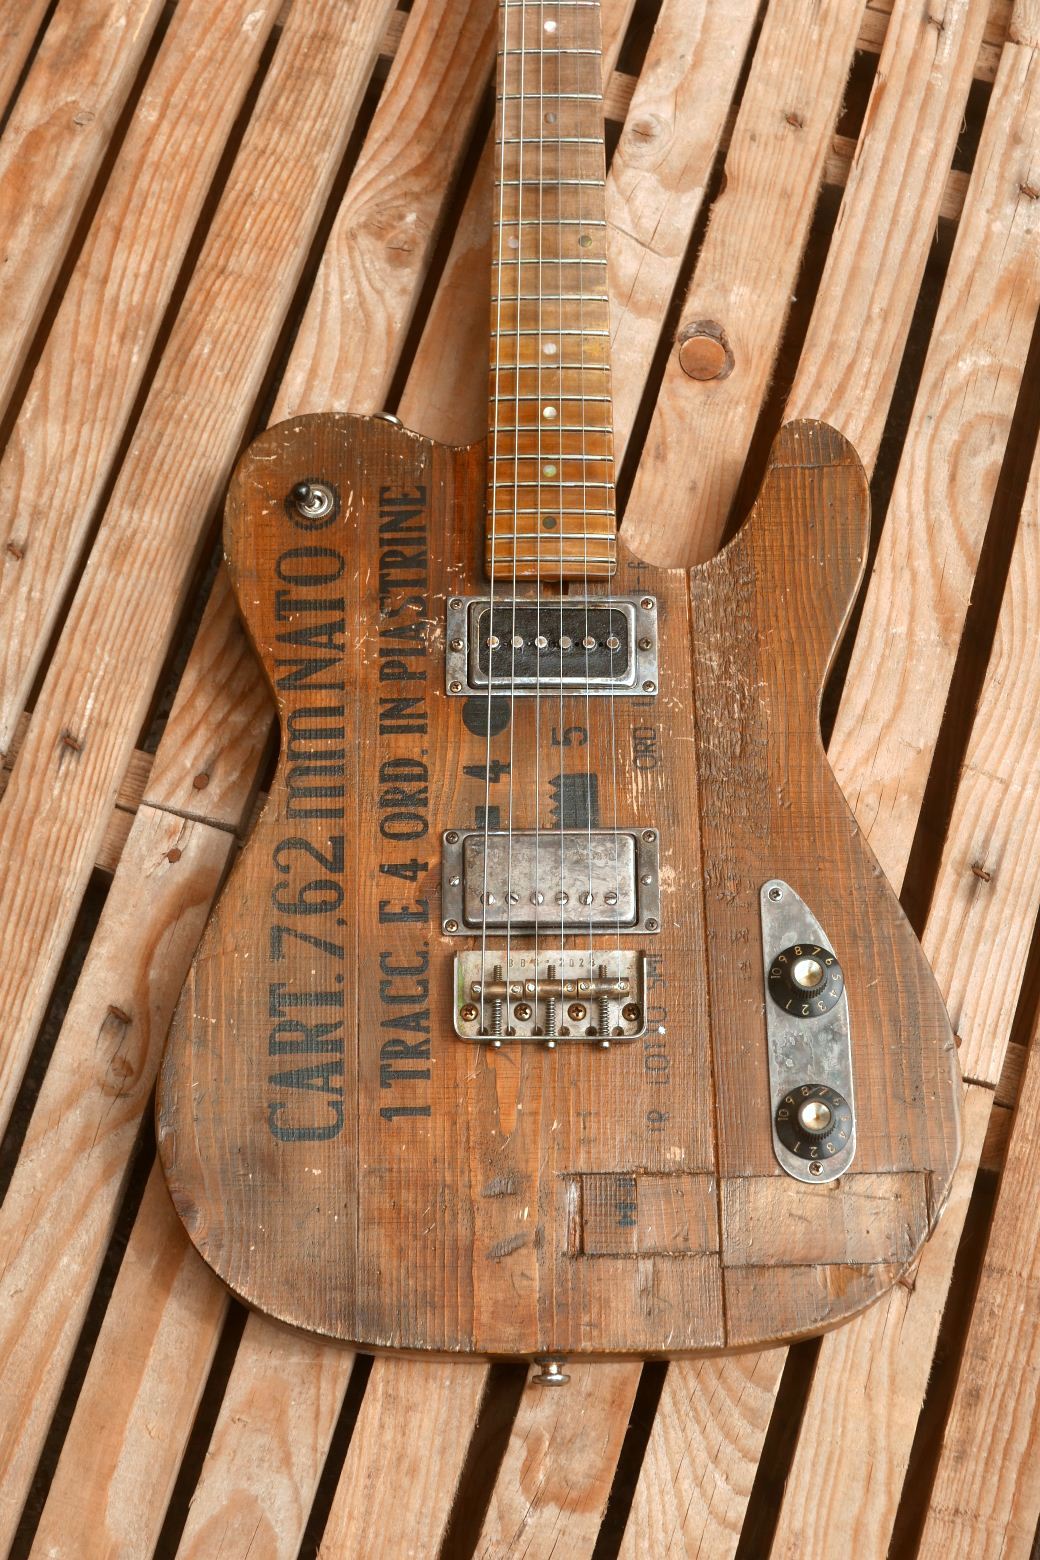 care barn telecaster guitar top